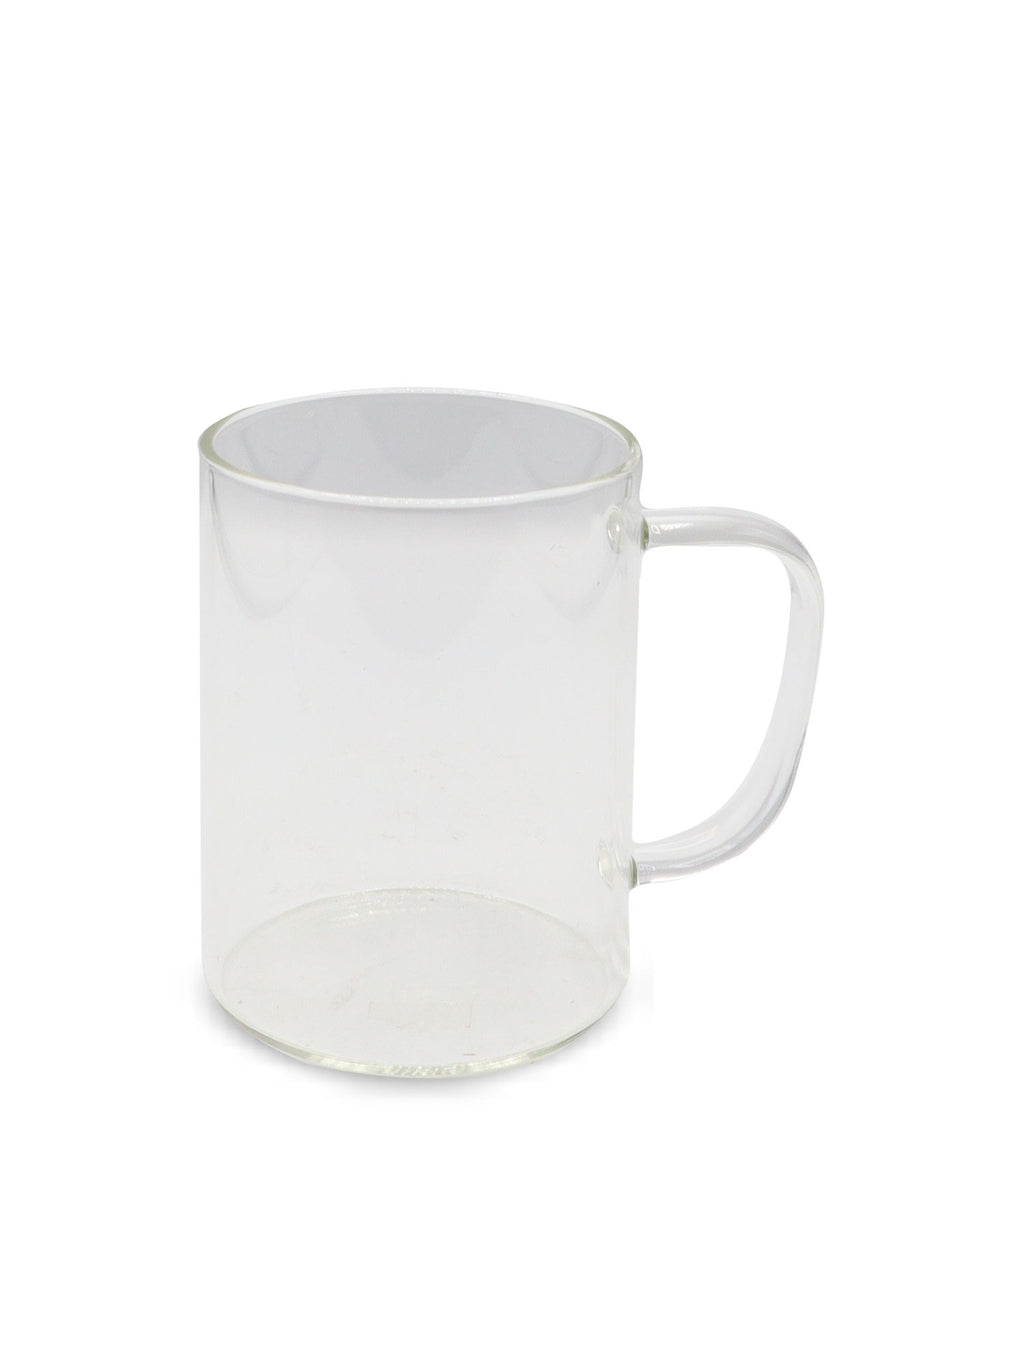 green-sublimation-glass-mug-the-tumbler-company